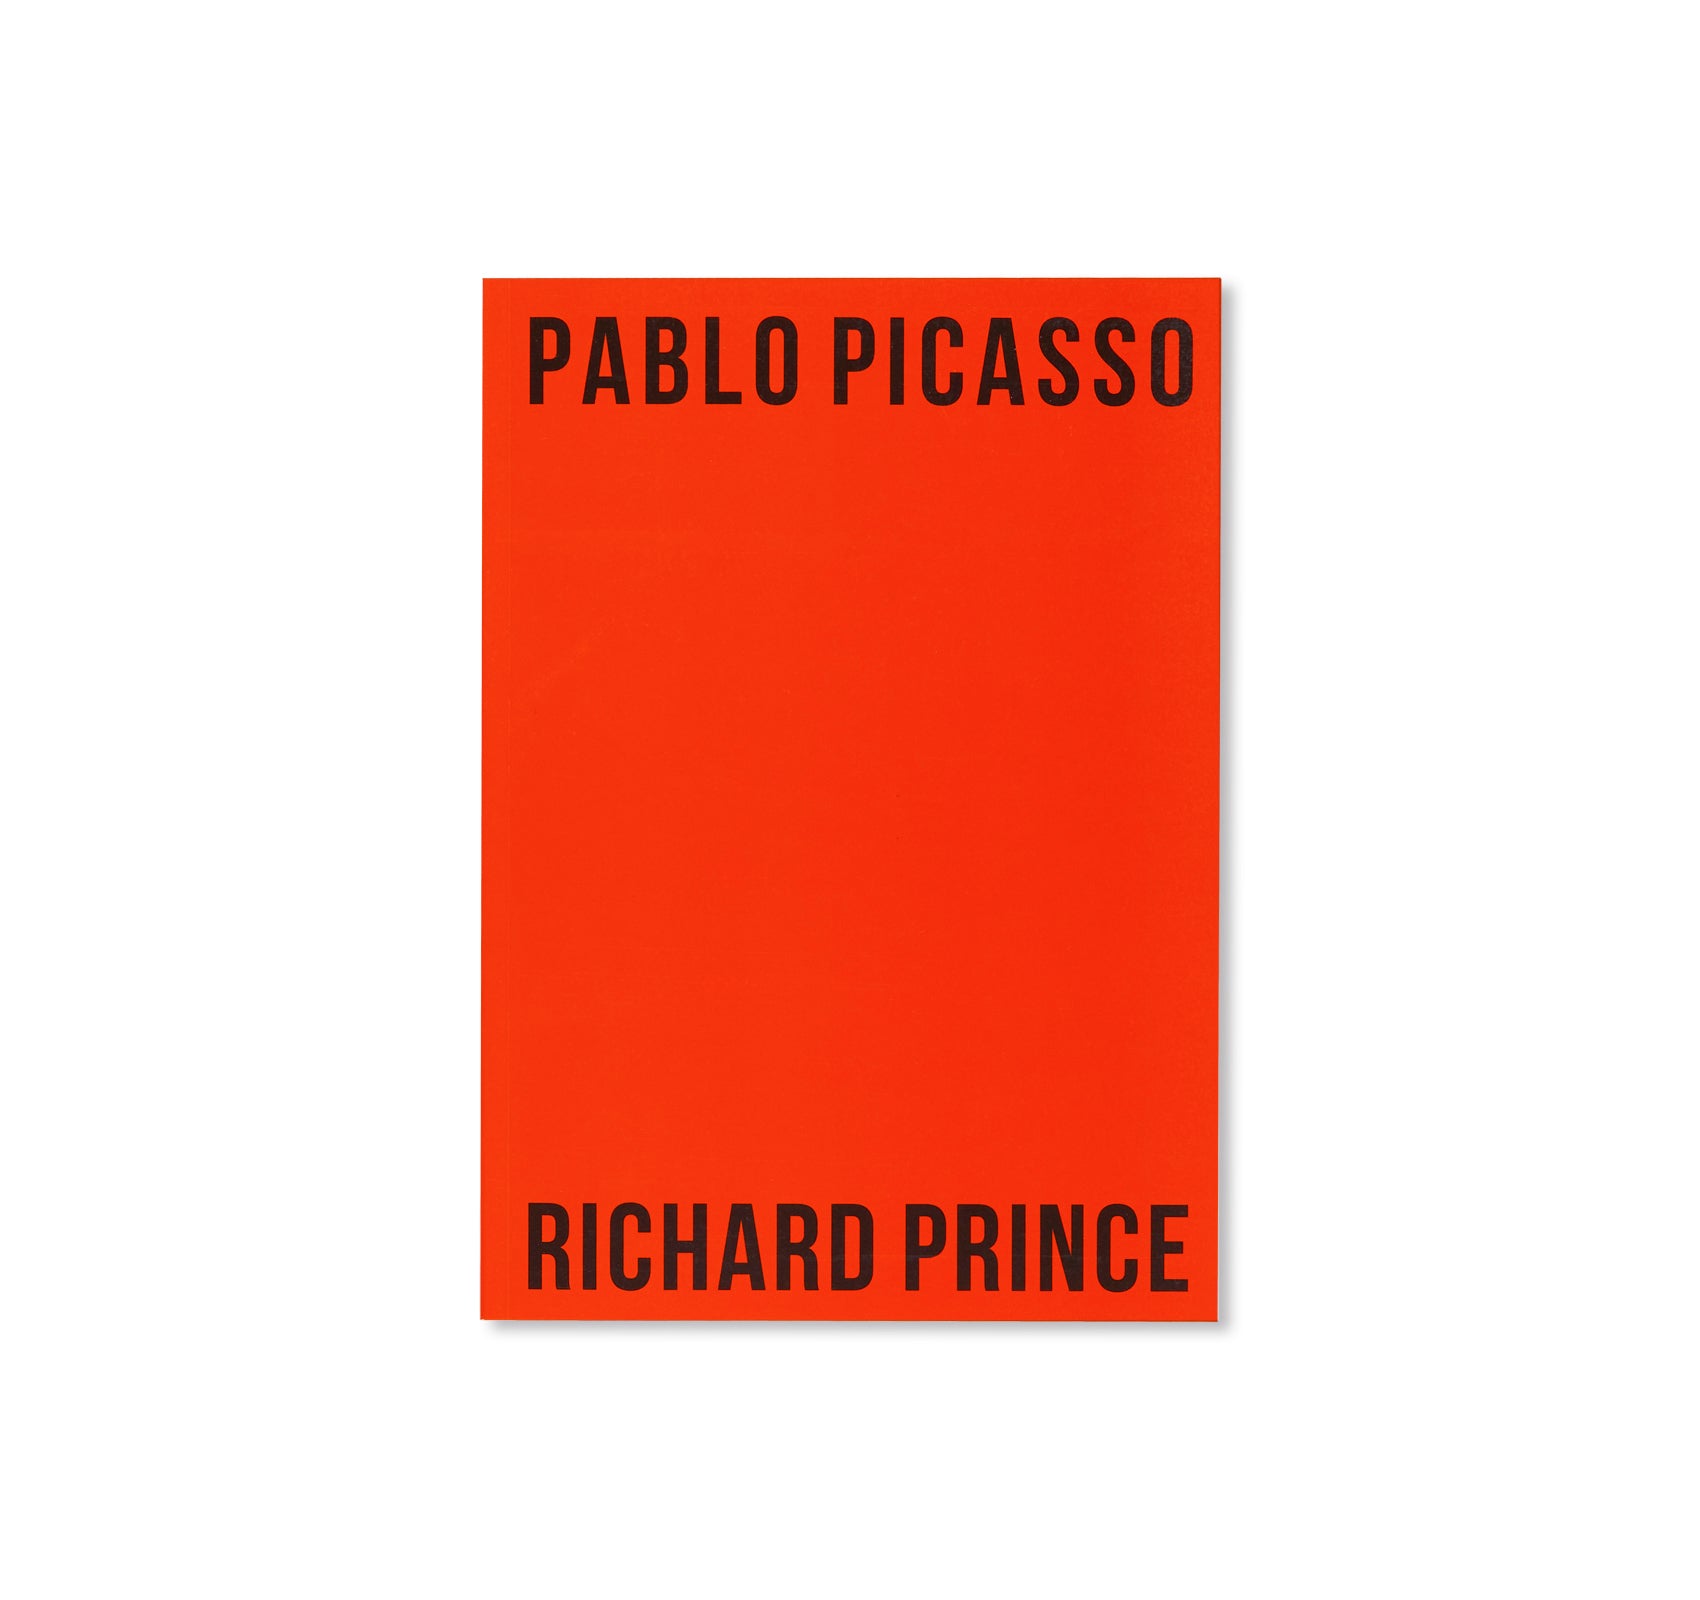 PABLO PICASSO RICHARD PRINCE by Richard Prince